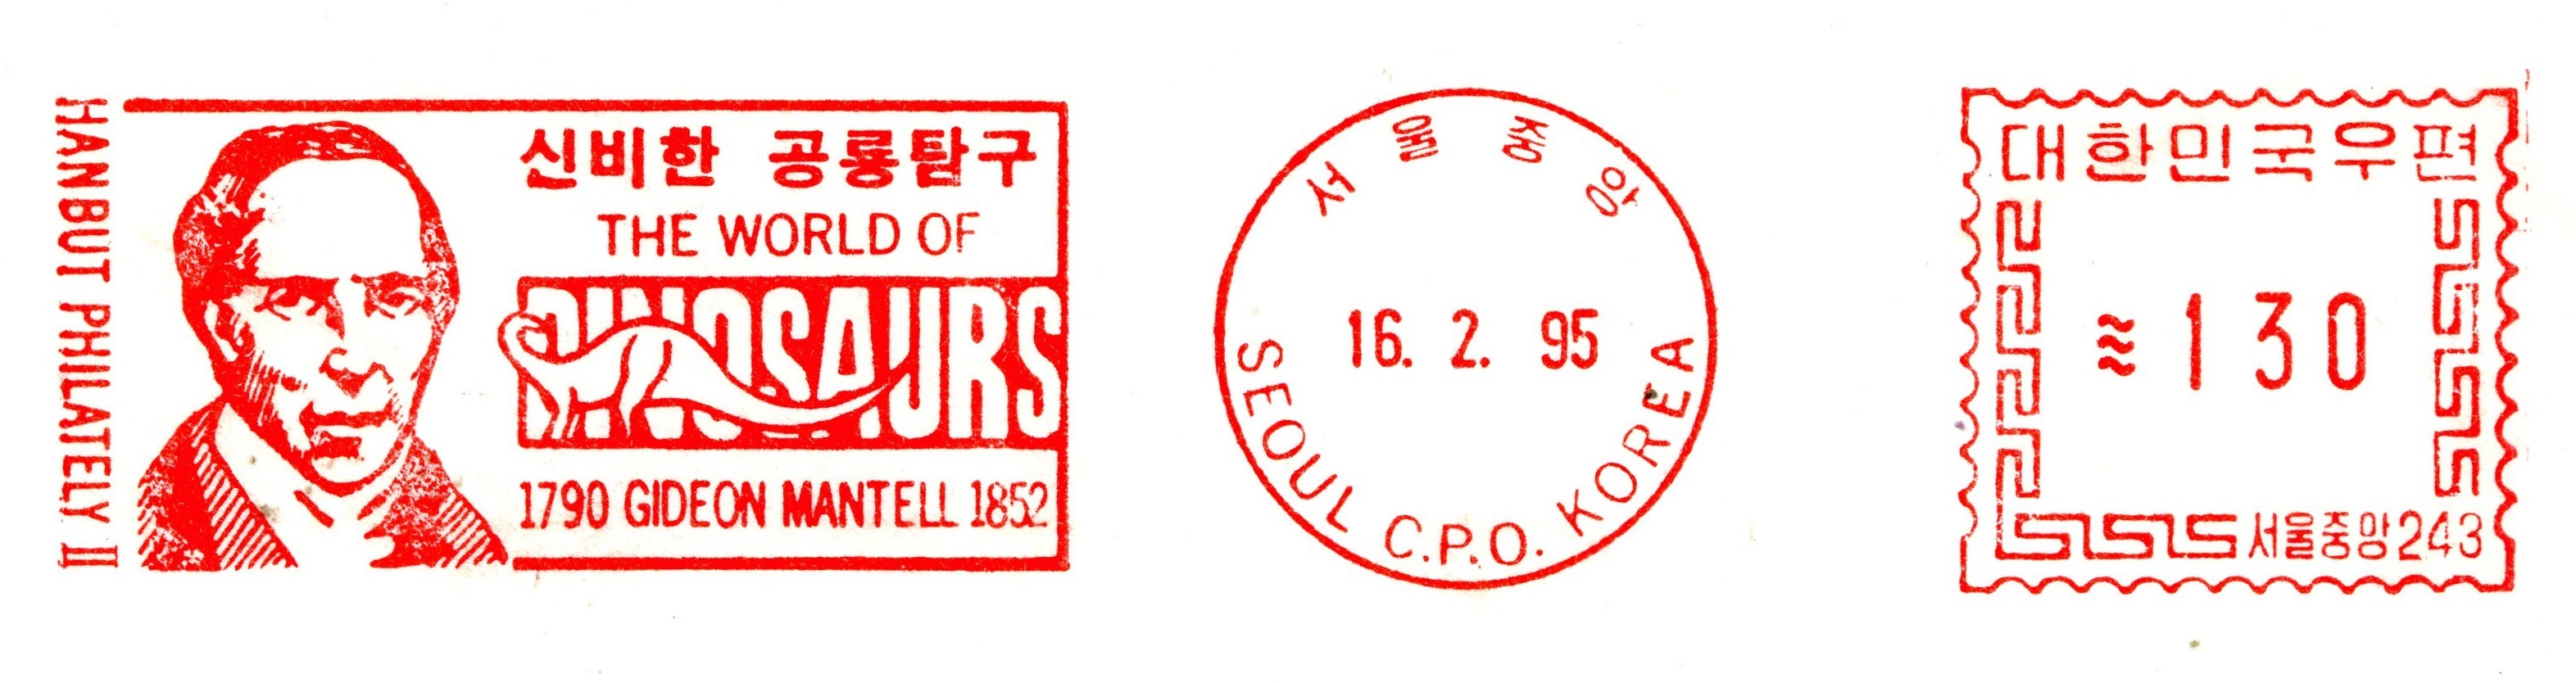 Gideon Mantell on meterfranking of South Korea 1995